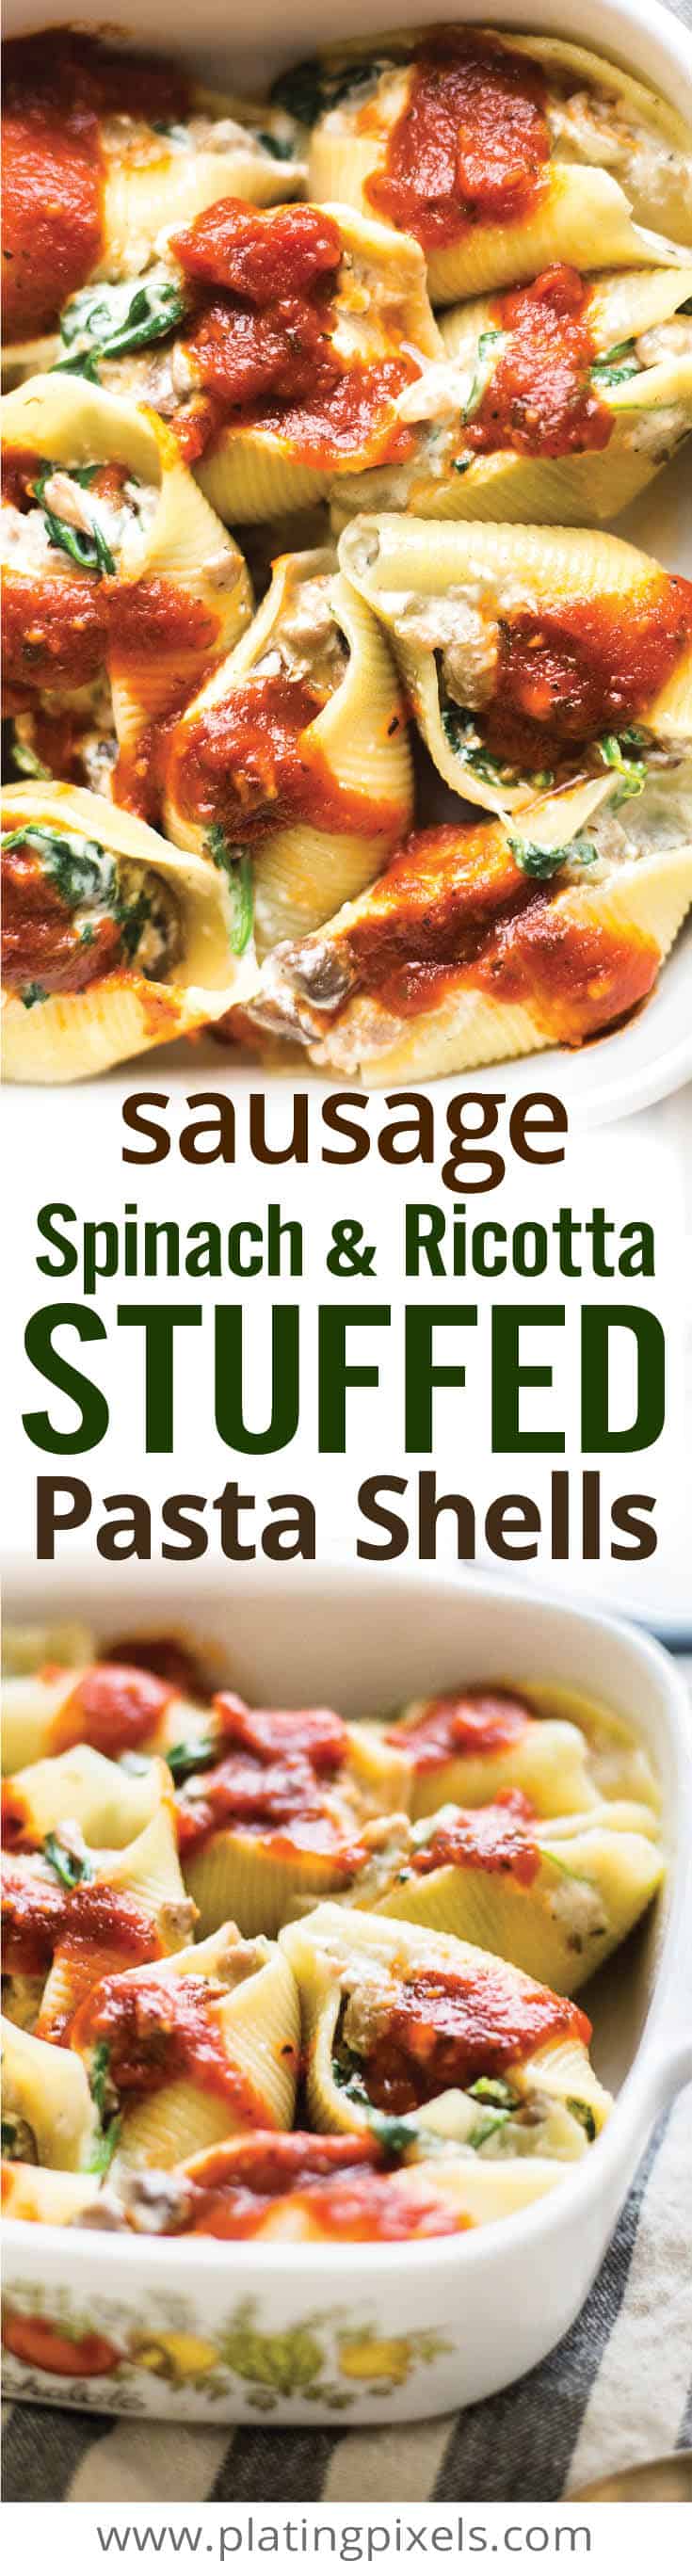 Sausage, Spinach and Ricotta Stuffed Pasta Shells - Plating Pixels